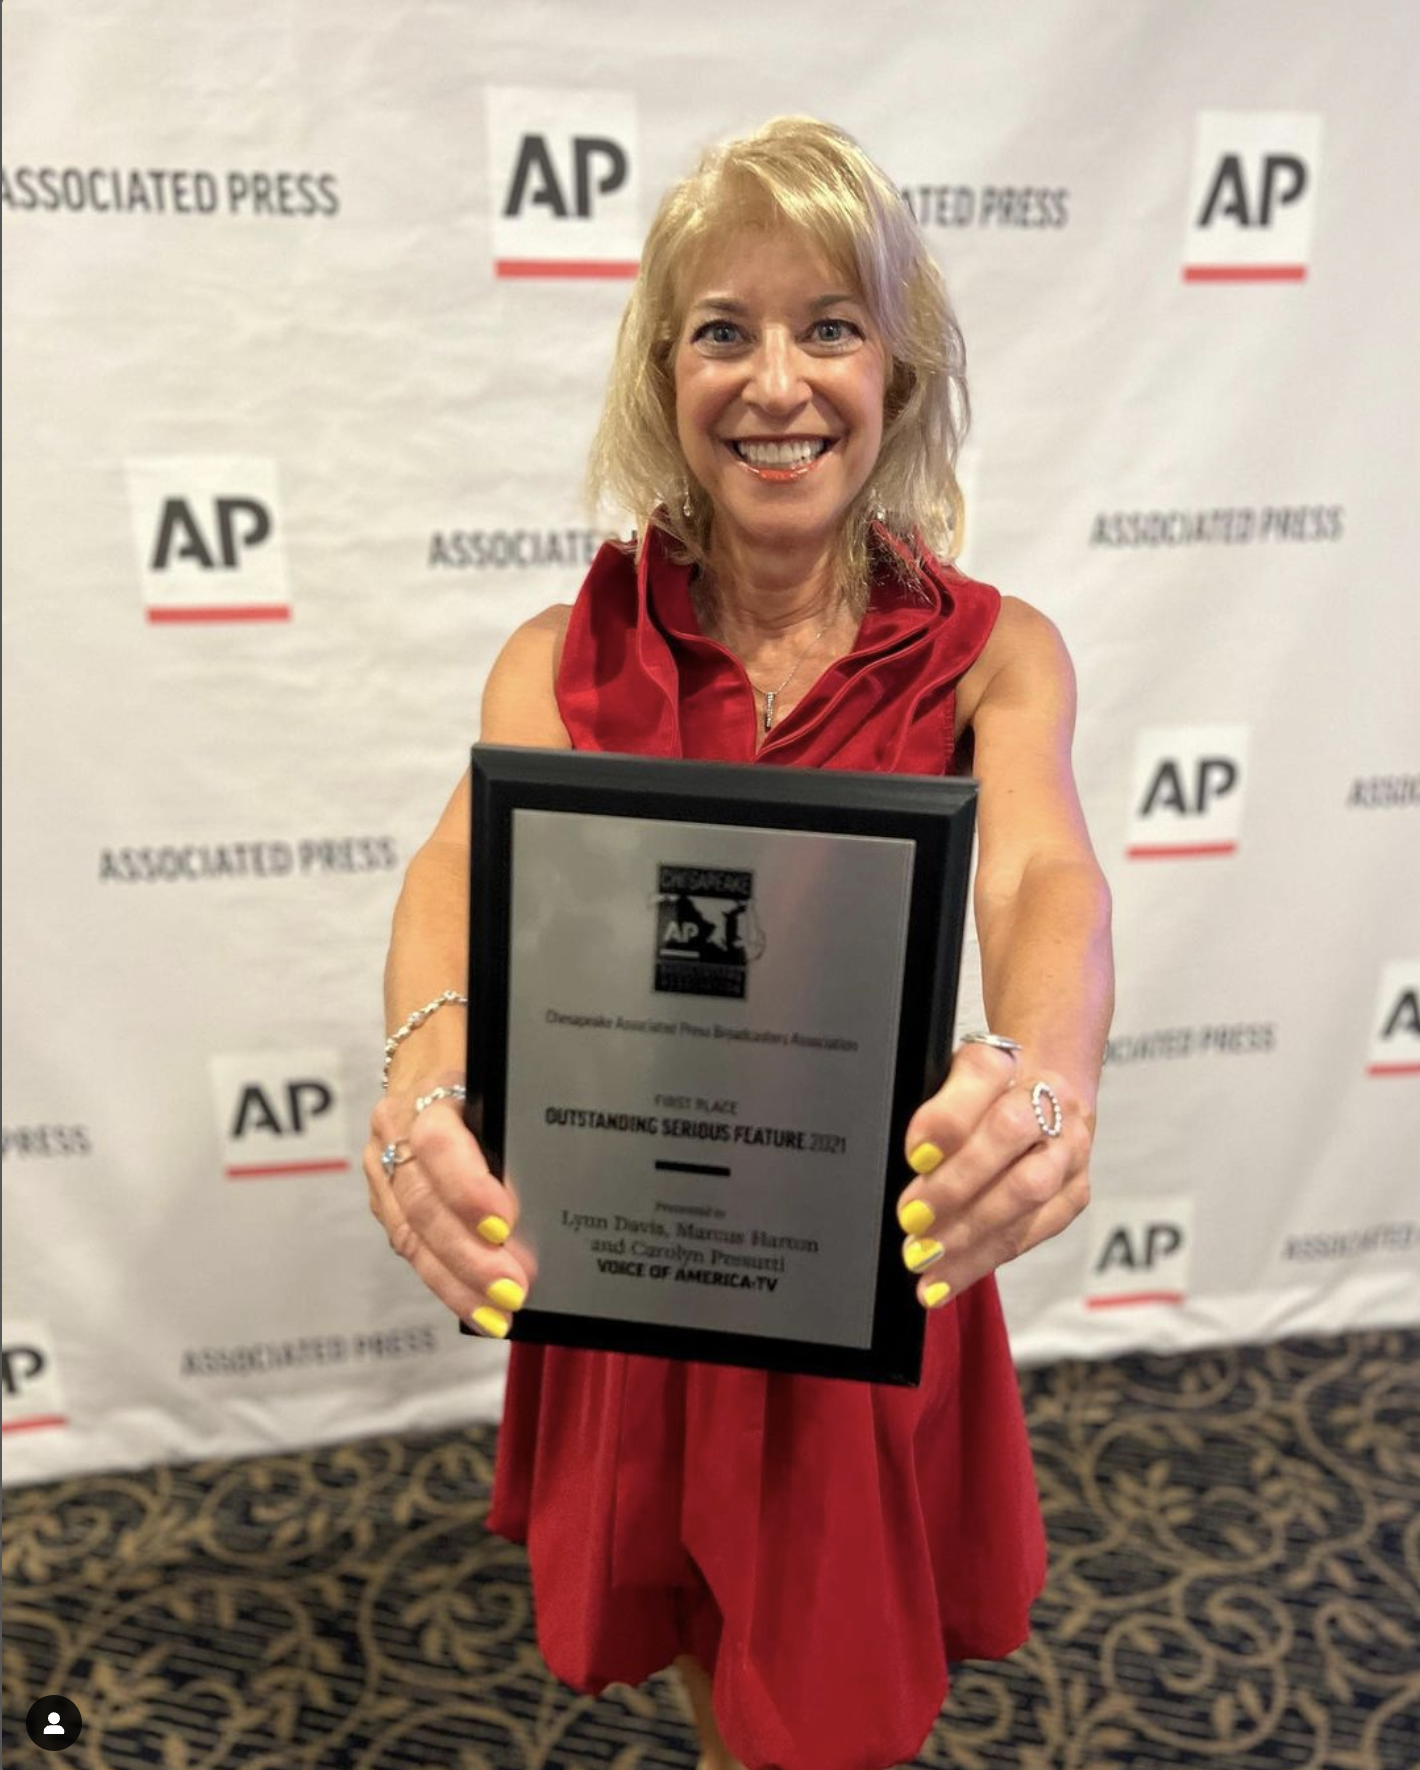 VOA wins a first place award from Regional AP Association